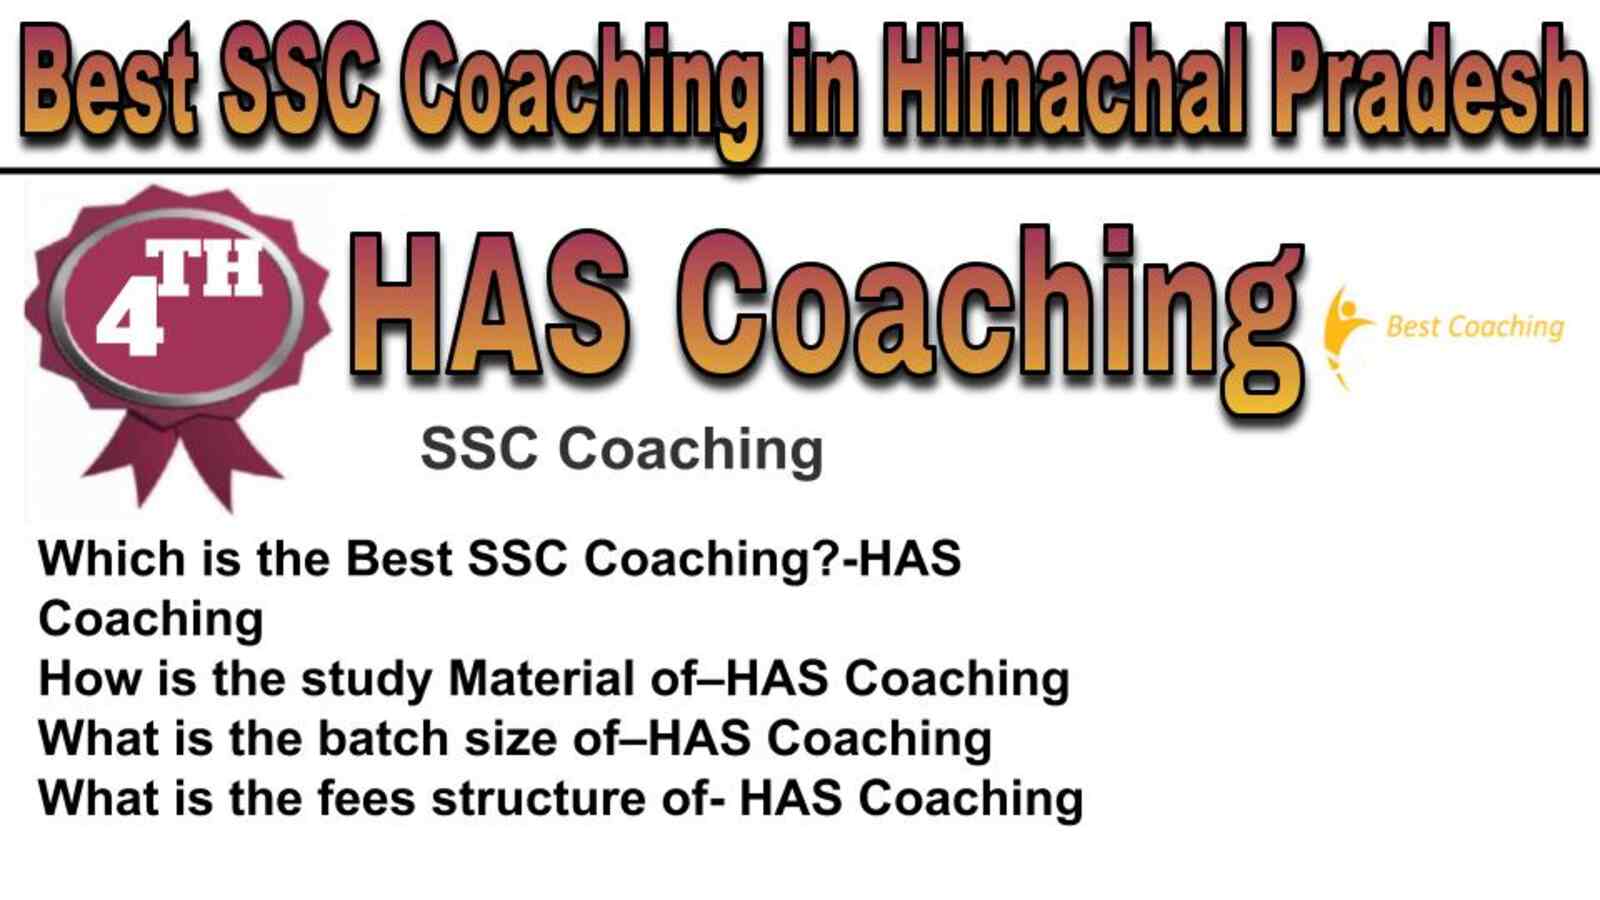 Rank 4 best SSC coaching in Himachal Pradesh